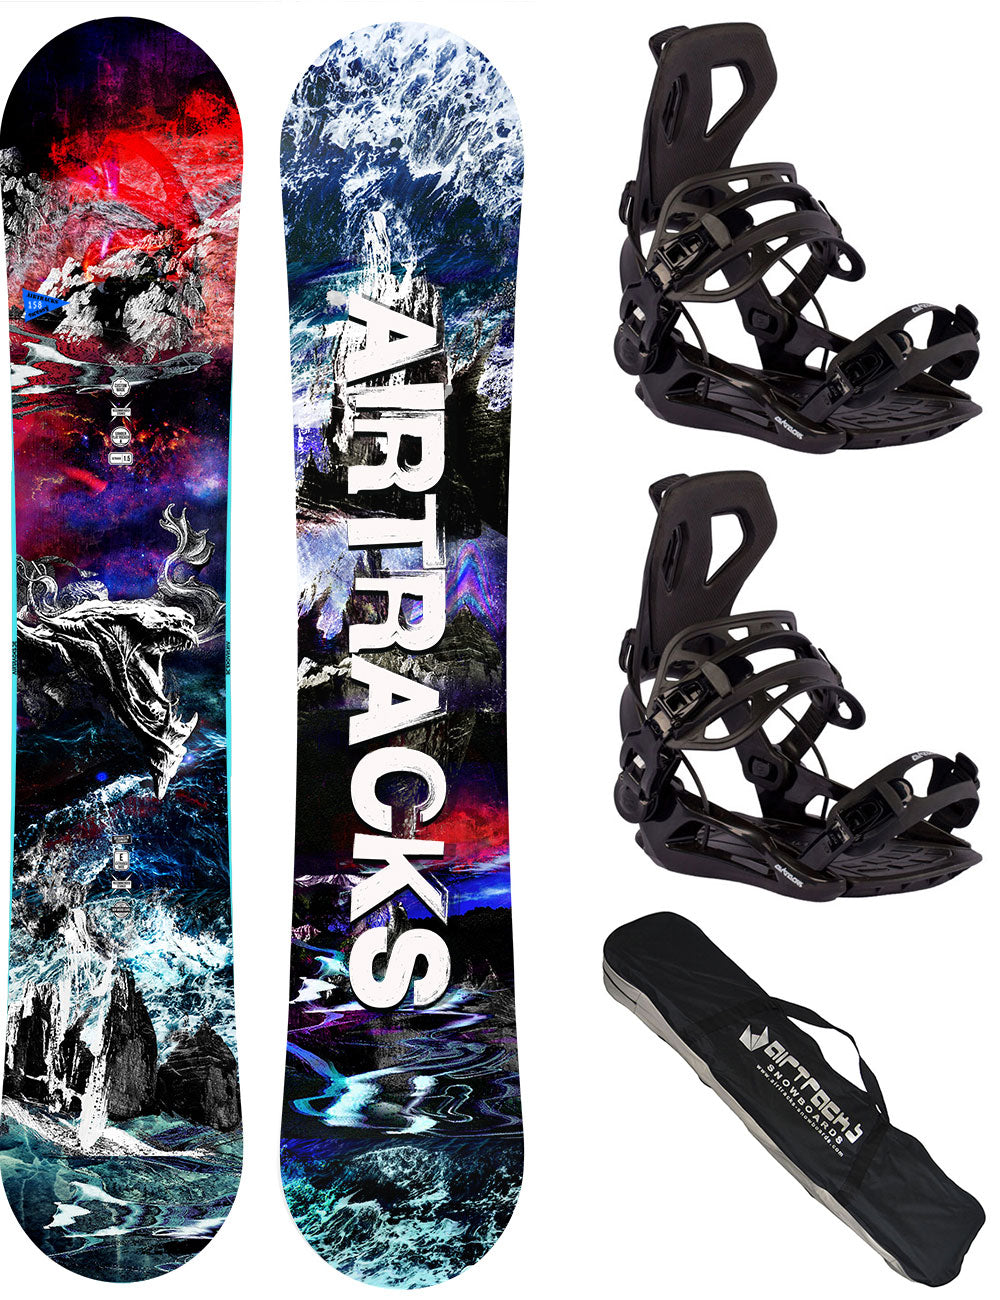 Herren Snowboardset Fantasy Carbon Zero Rocker + Snowboard Bindung Master Pro + SB Bag